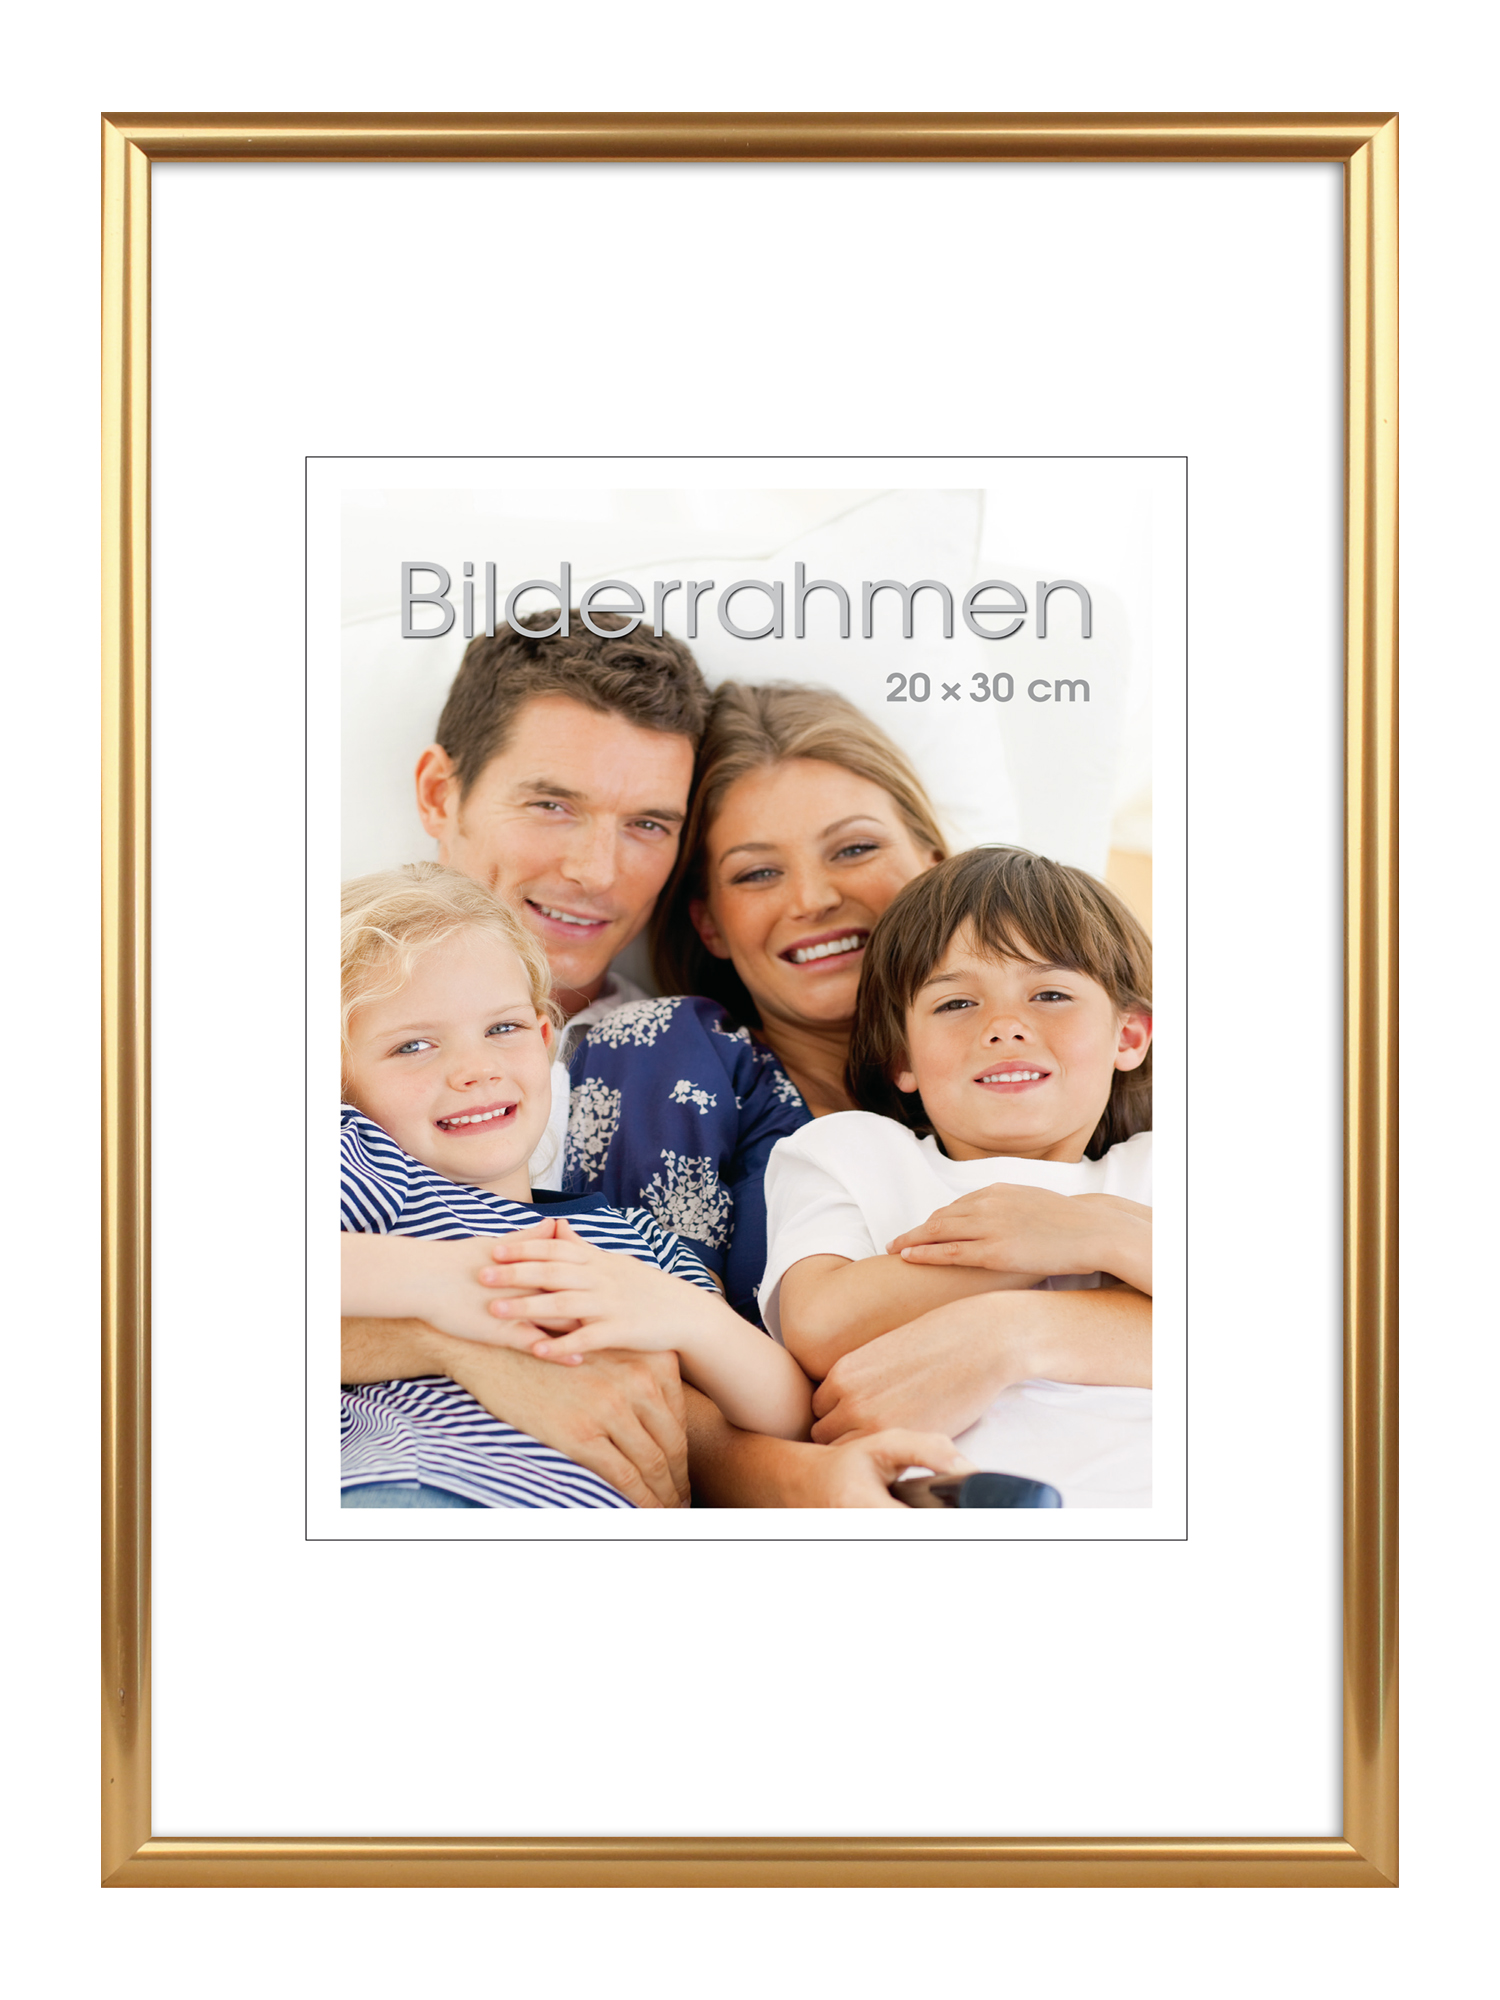 INTERTRADING Bilderrahmen 20 x 30 cm gold